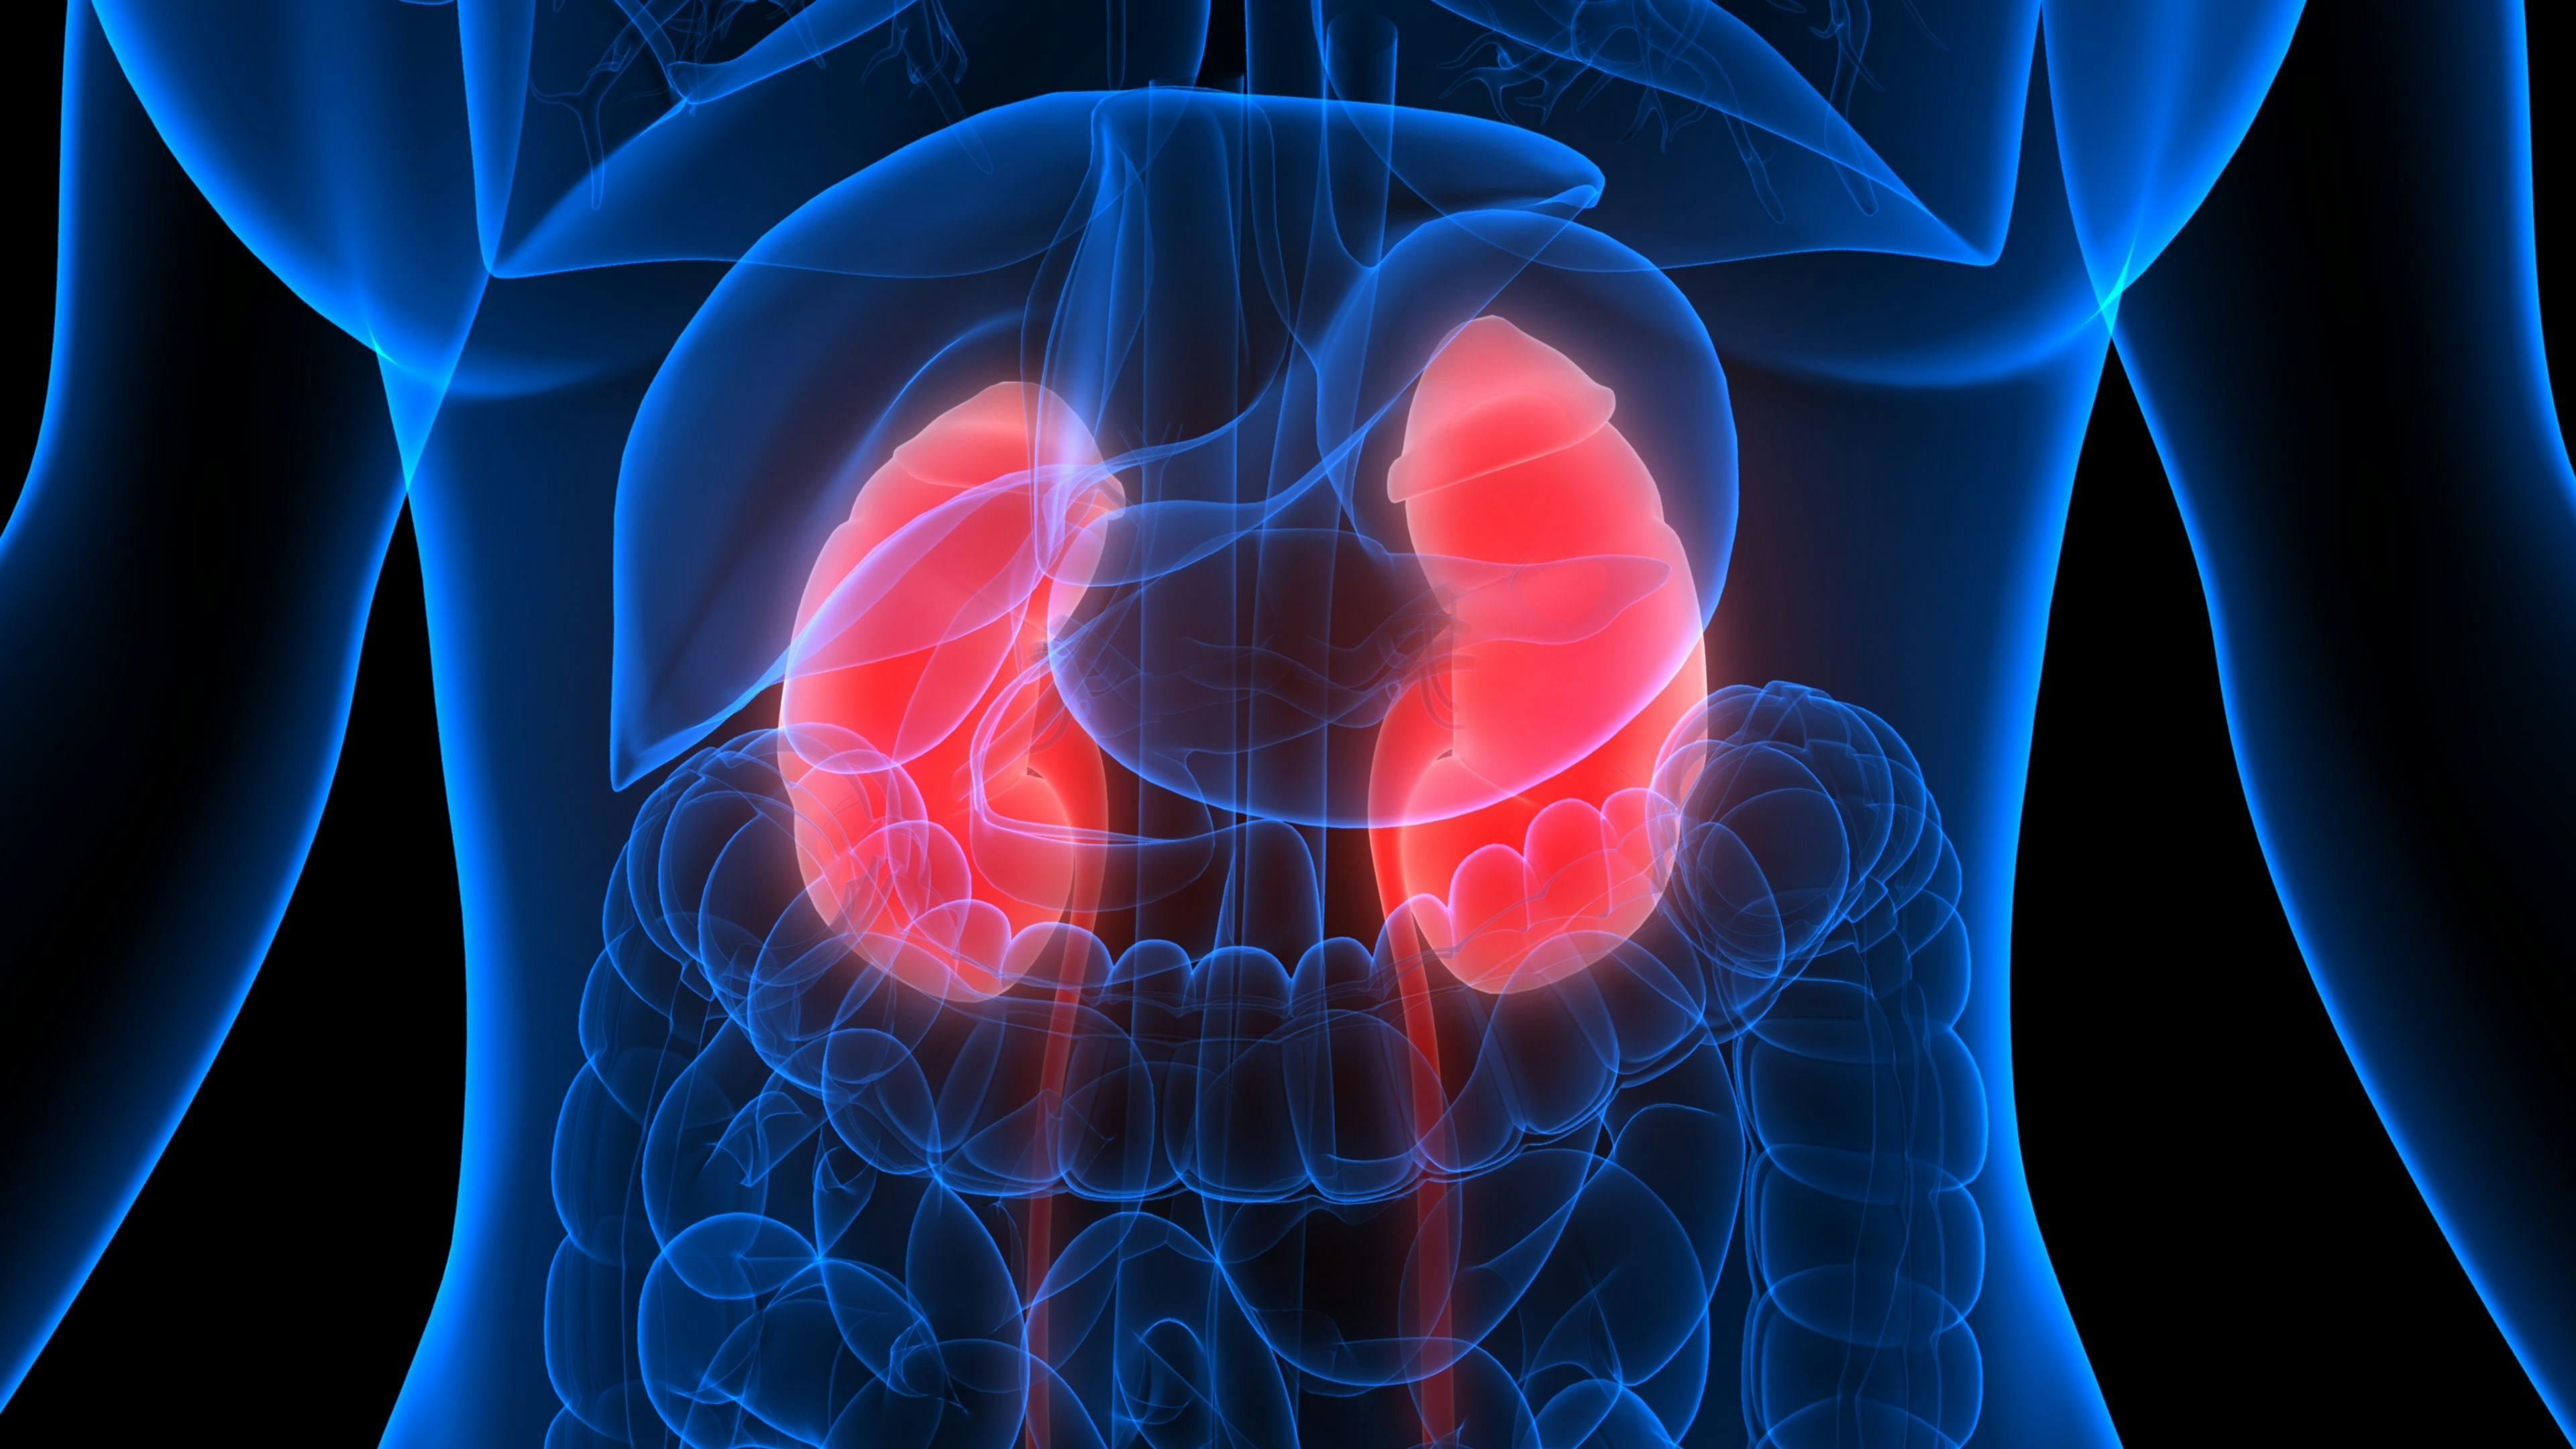 Graphic of kidneys / magicmine - stock.adobe.com